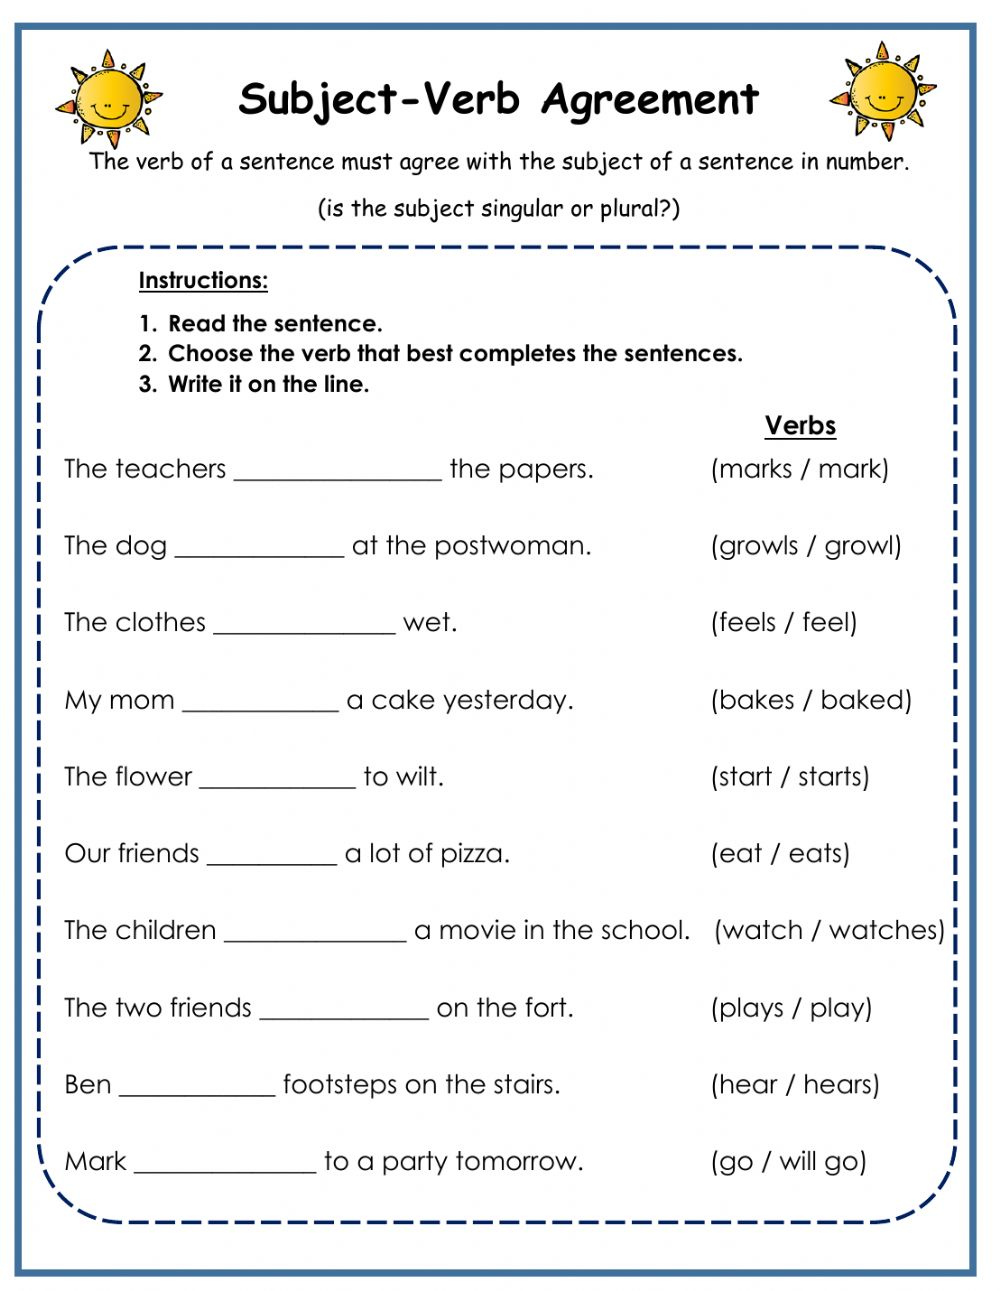 free-printable-subject-verb-agreement-worksheets-lyana-worksheets